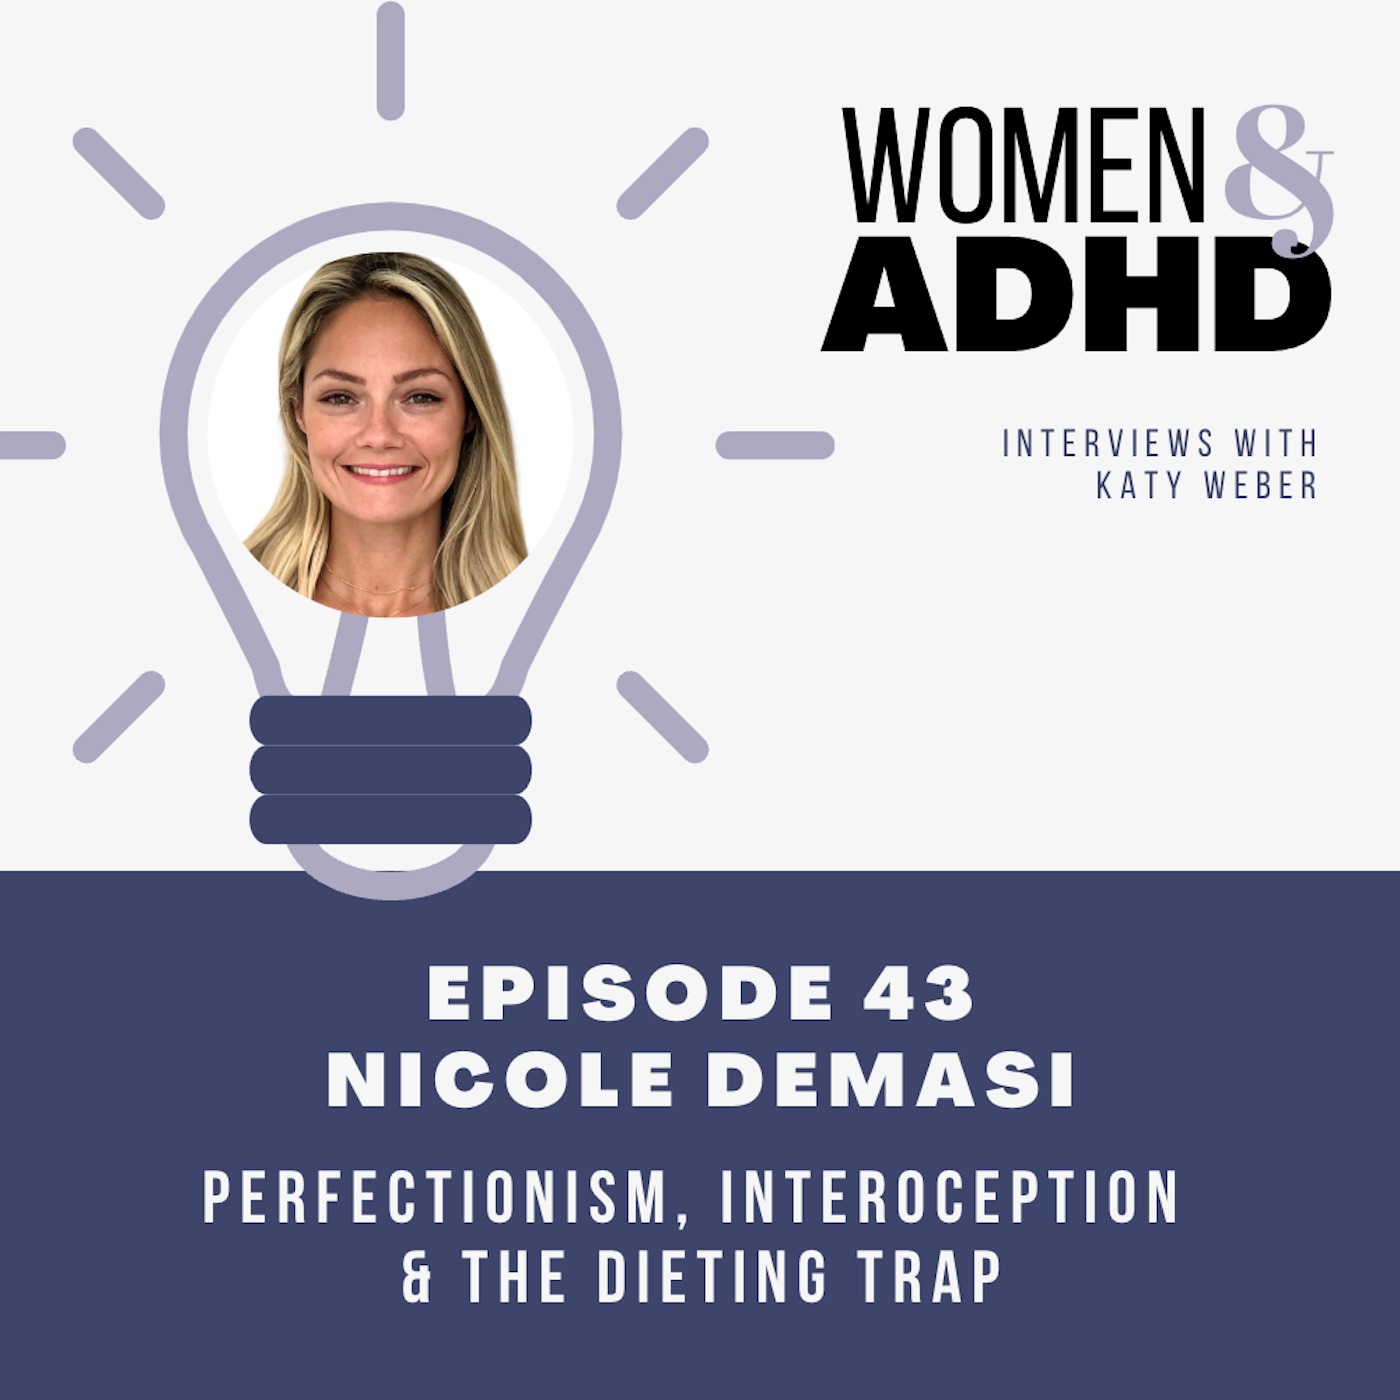 Nicole DeMasi: Perfectionism, interoception & the dieting trap